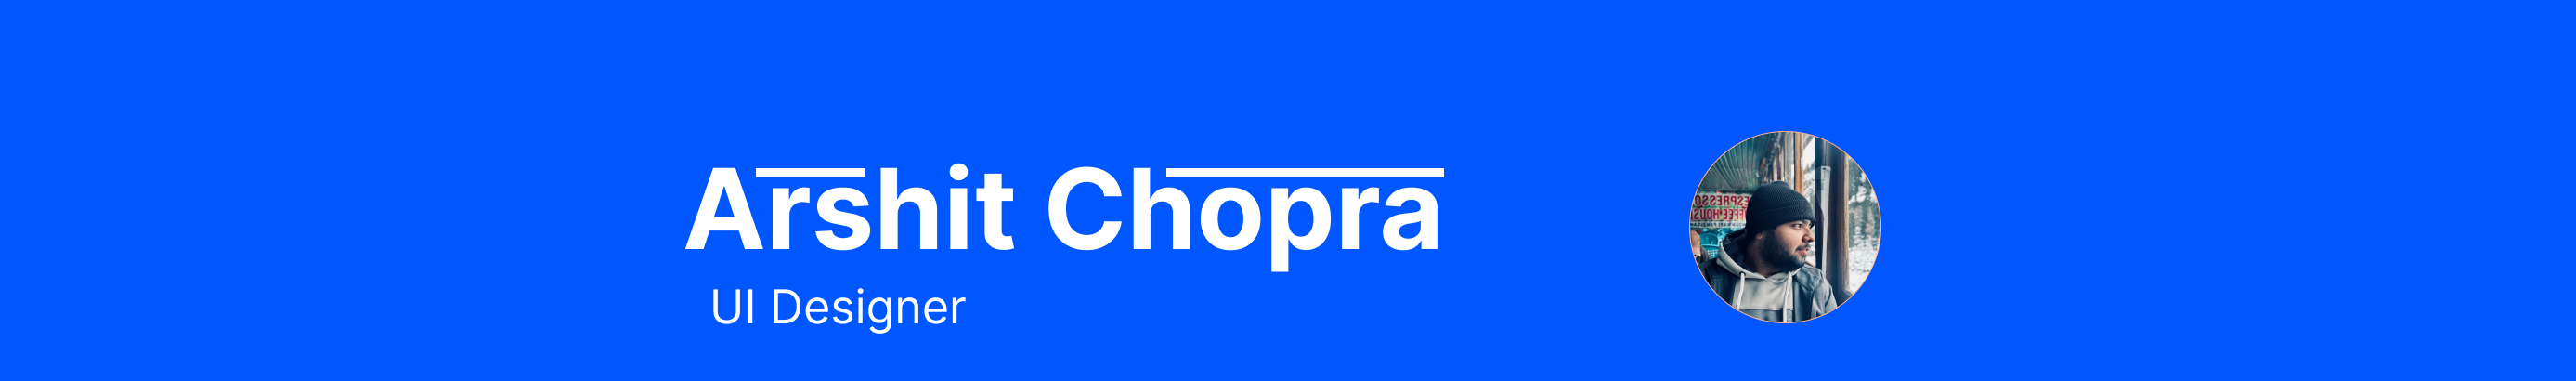 Arshit Chopra's profile banner